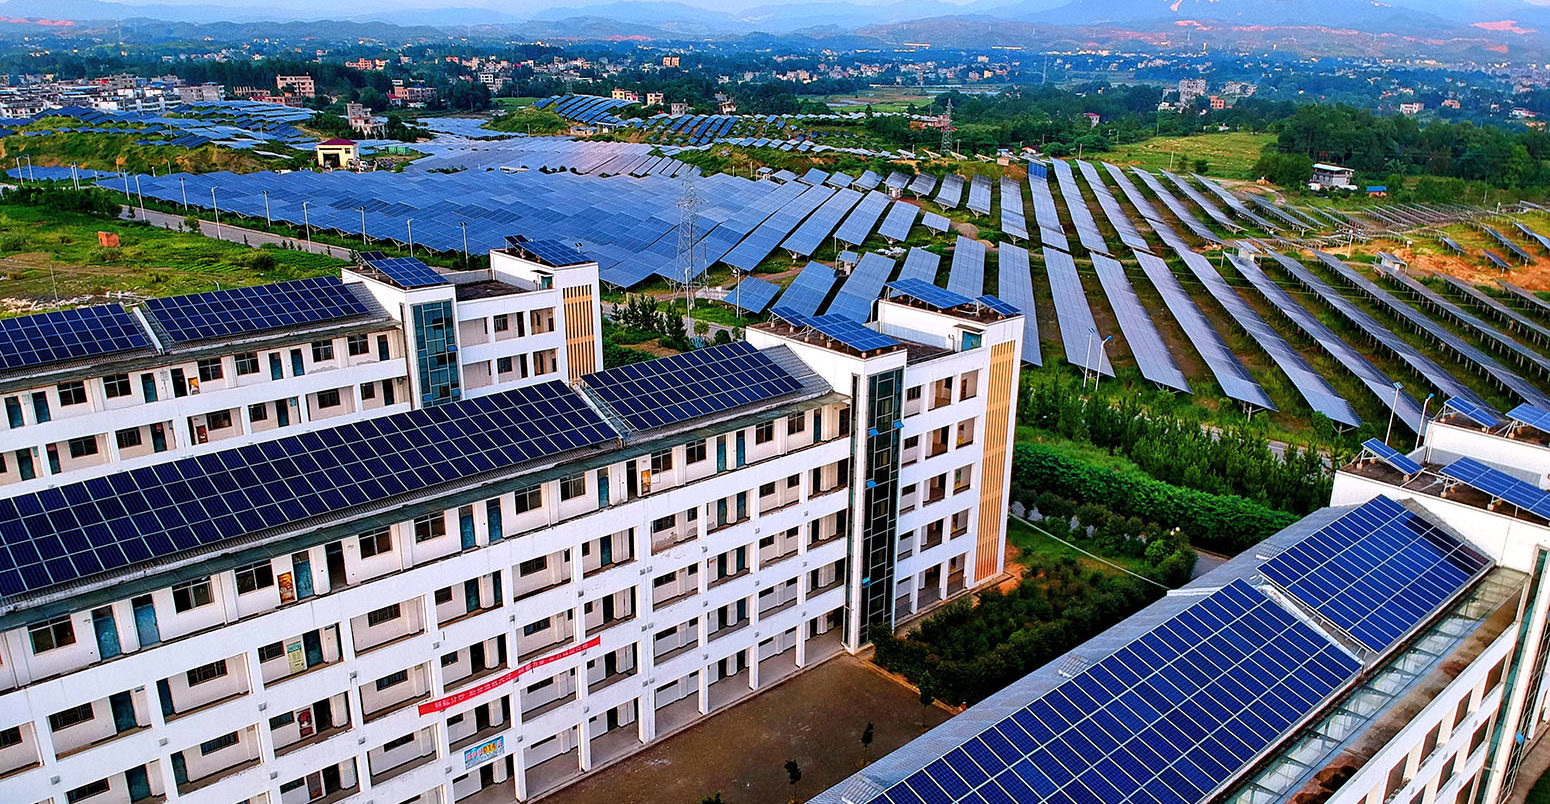 Rooftop solar panels in Changjiang village, China. Credit: Imaginechina Limited / Alamy Stock Photo. WA9NTN